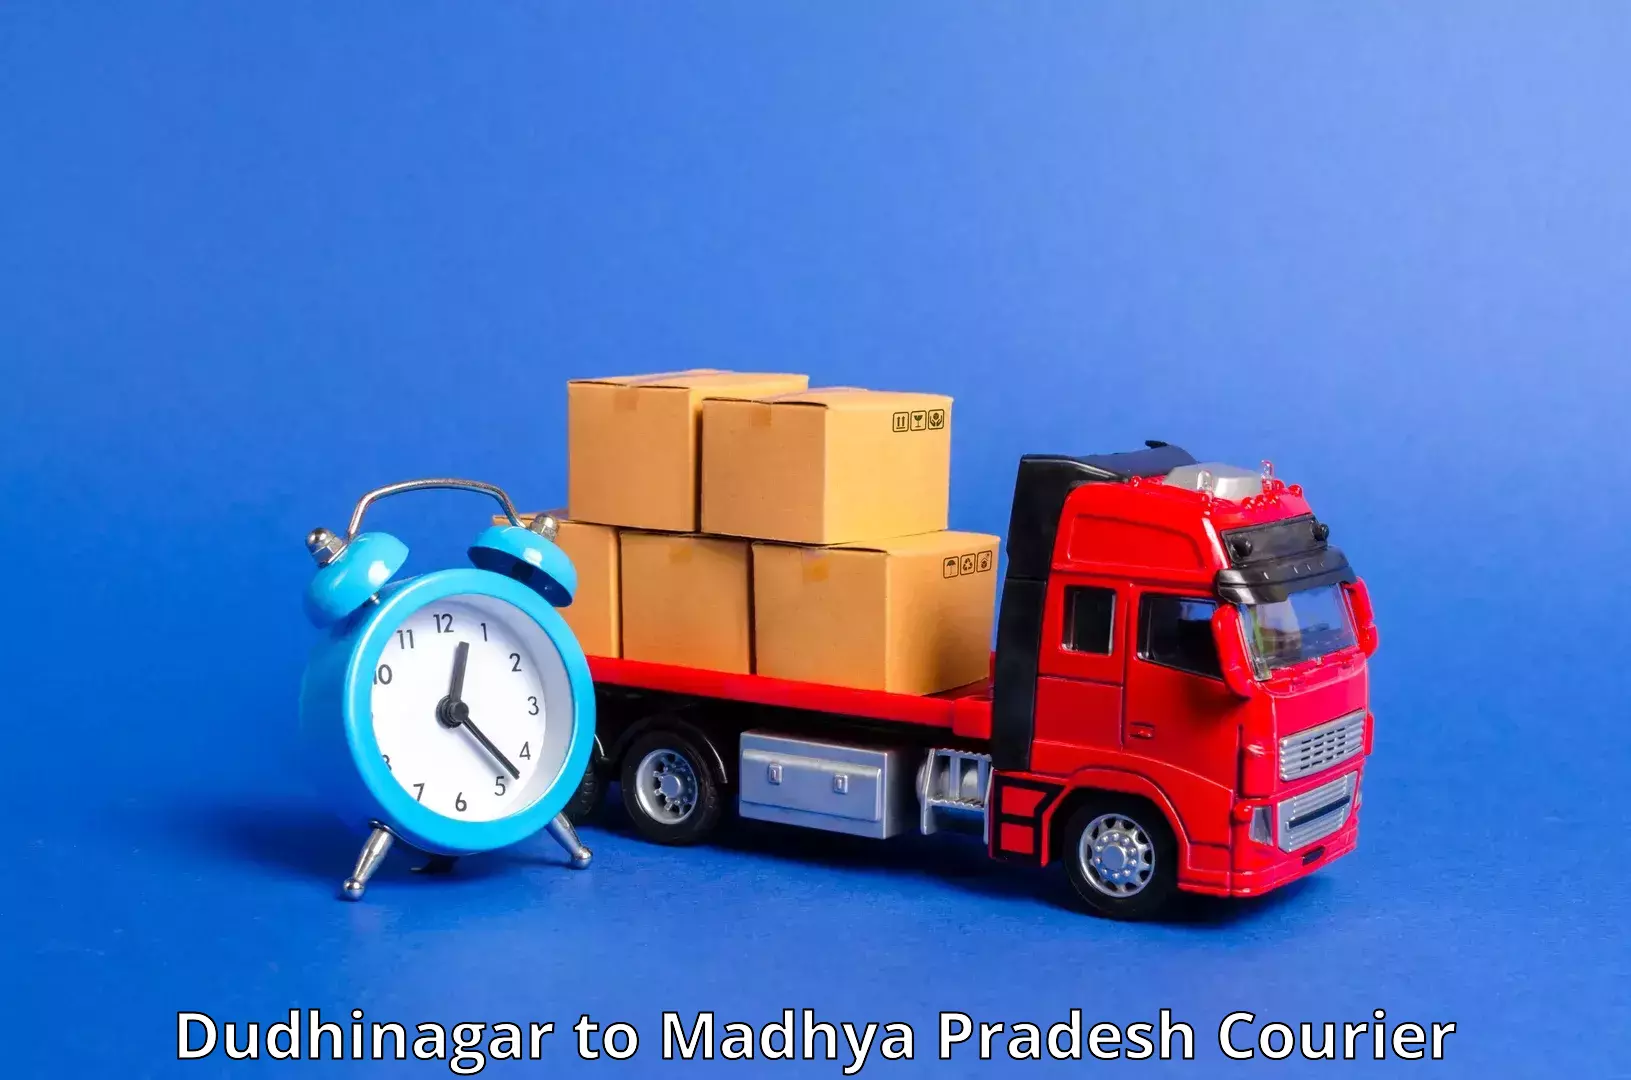 24-hour courier service in Dudhinagar to Hoshangabad